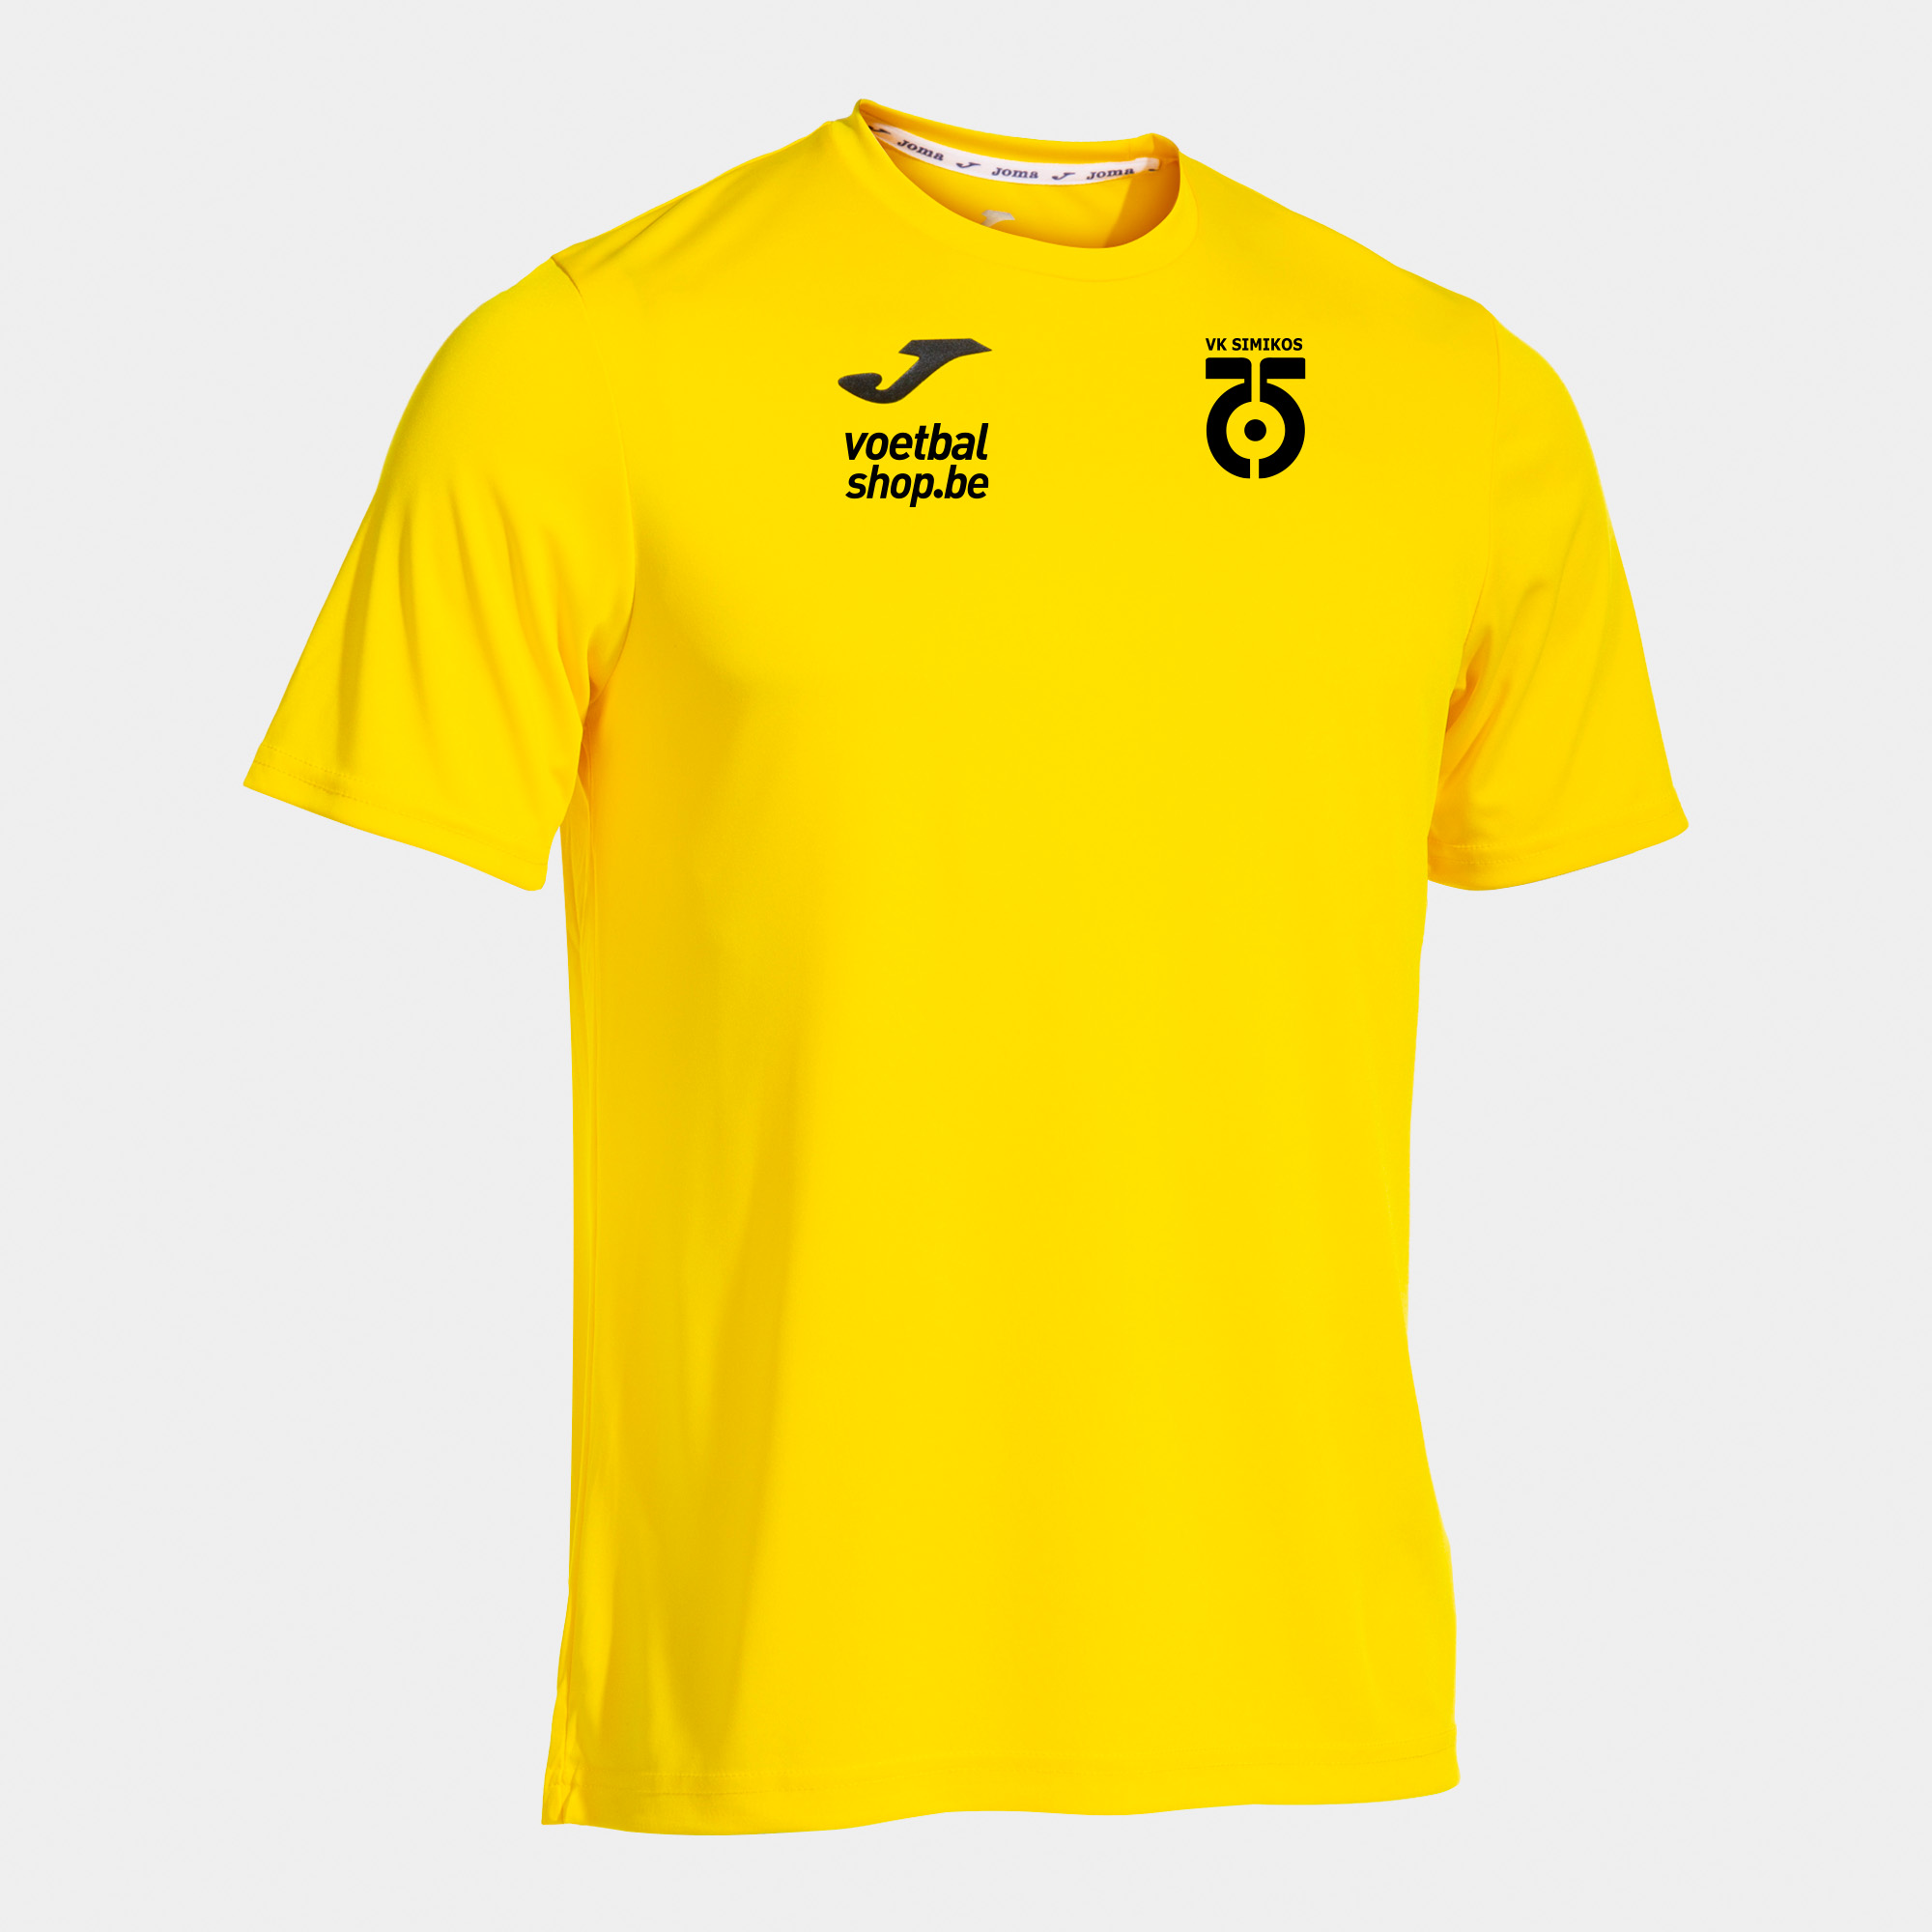 VK Simikos - Shirt short sleeve man Combi yellow